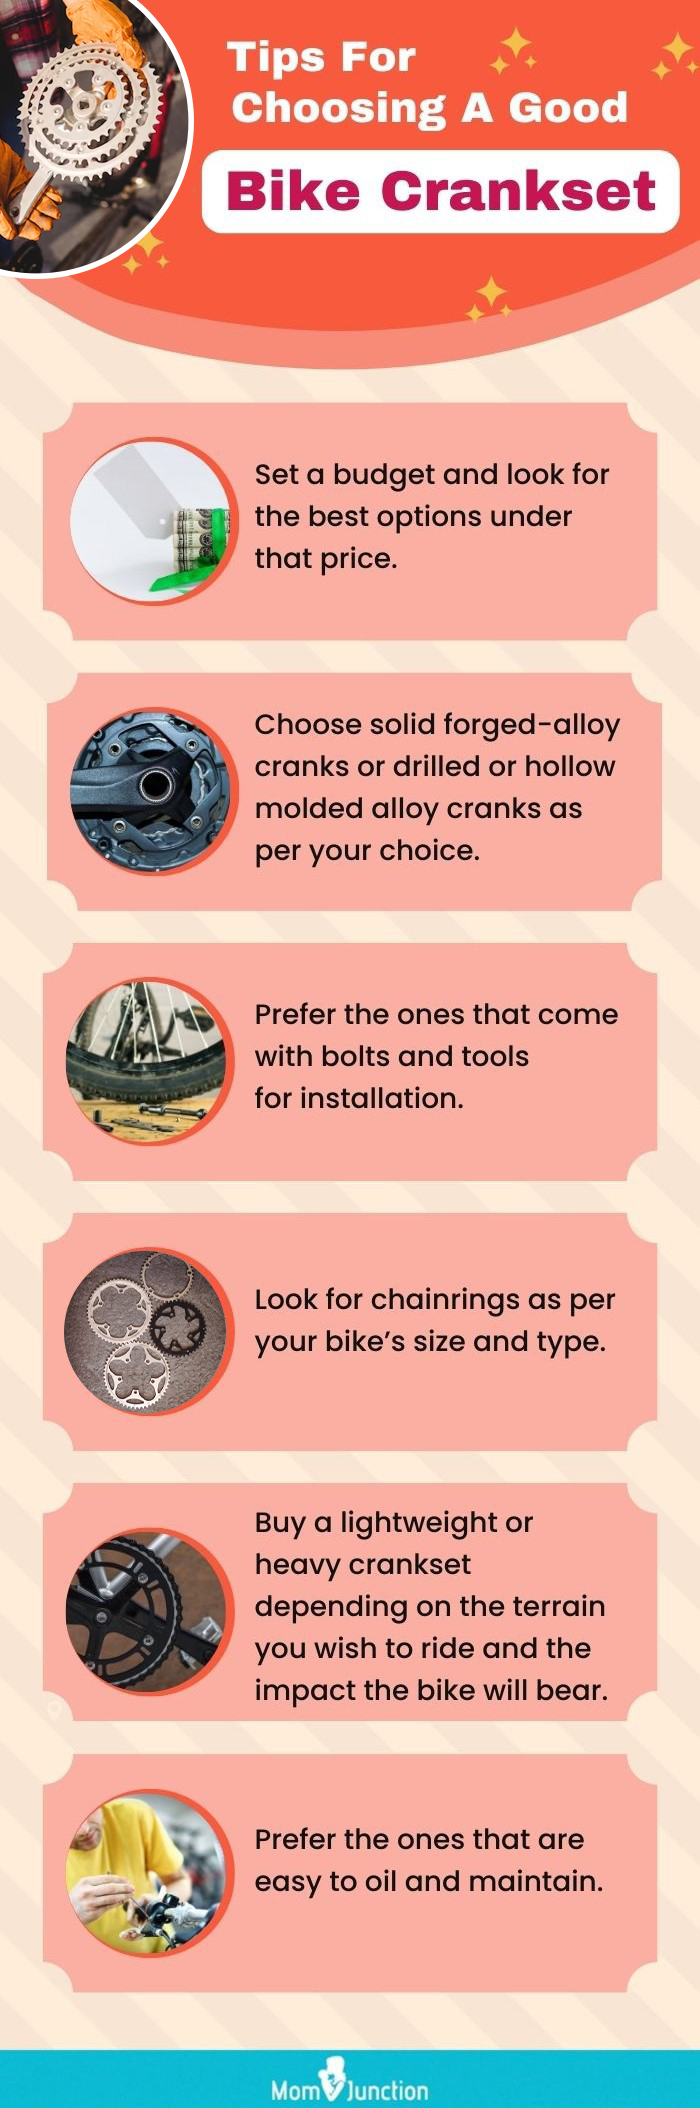 Tips For Choosing A Good Bike Crankset (infographic)